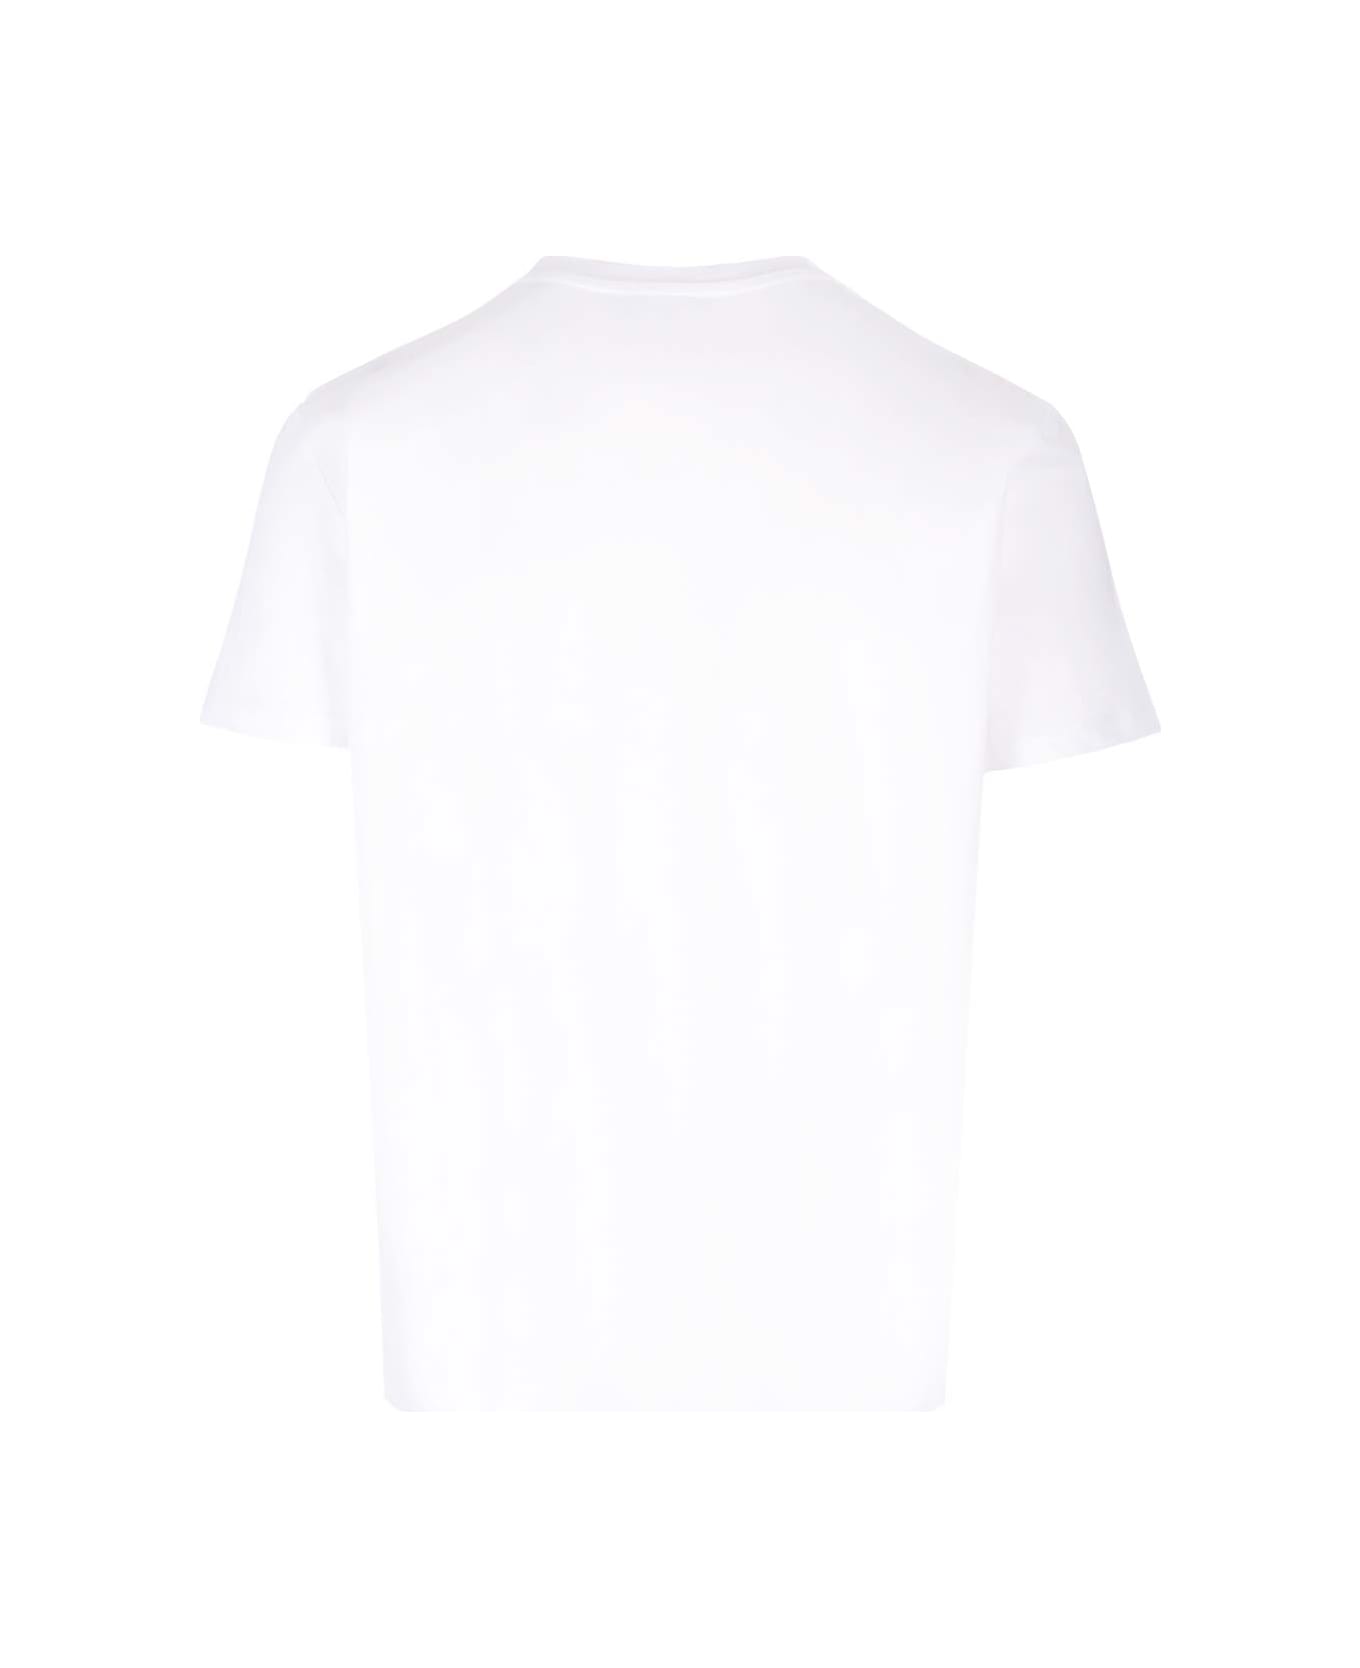 A.P.C. White/red 'vpc' T-shirt